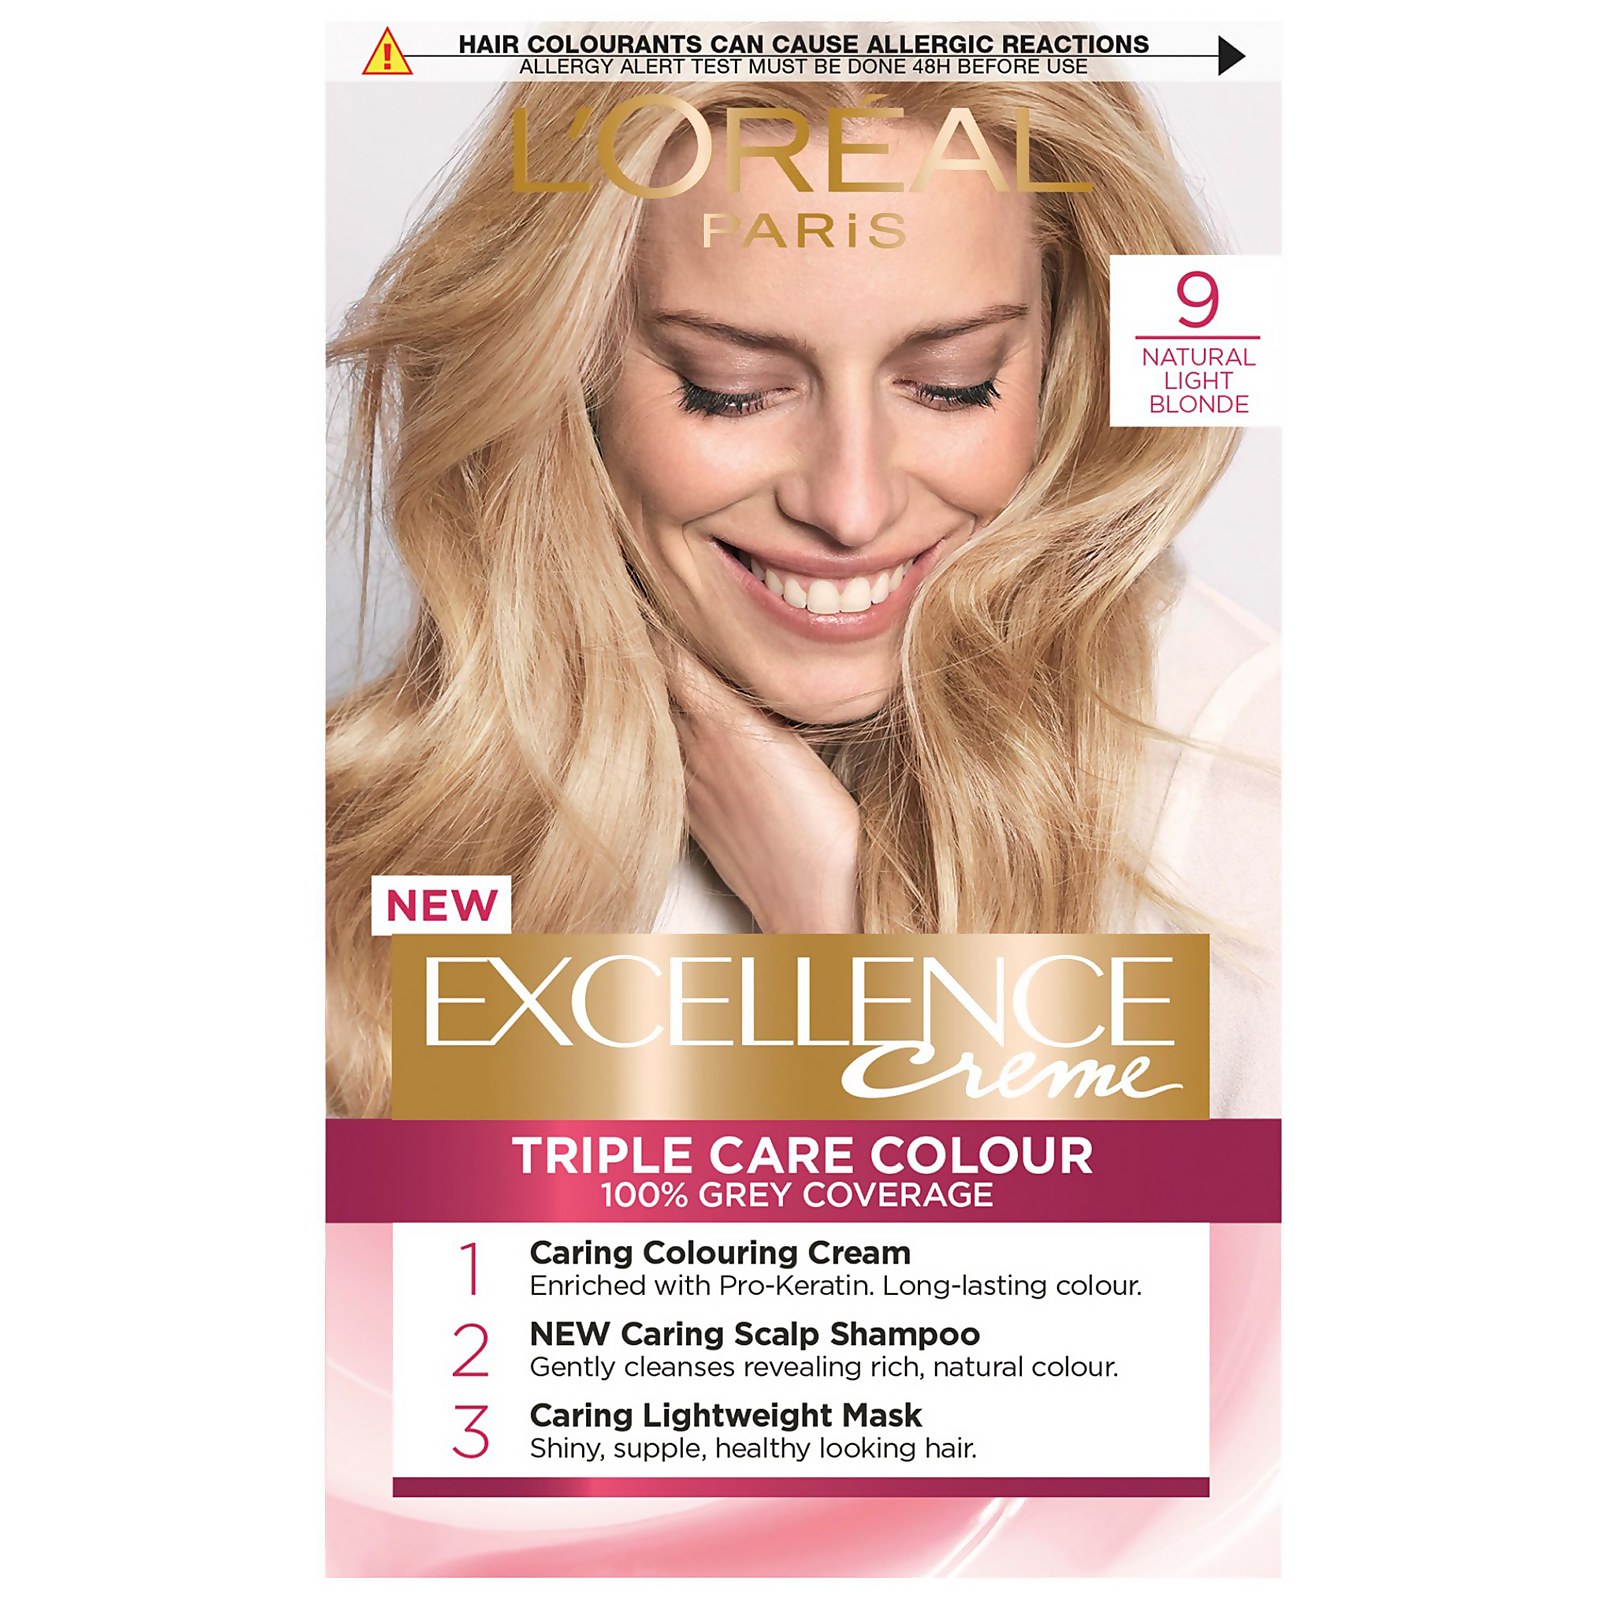 L'Oreal Paris Excellence Creme Permanent Hair Dye (Various Shades) - 9 Natural Light Blonde